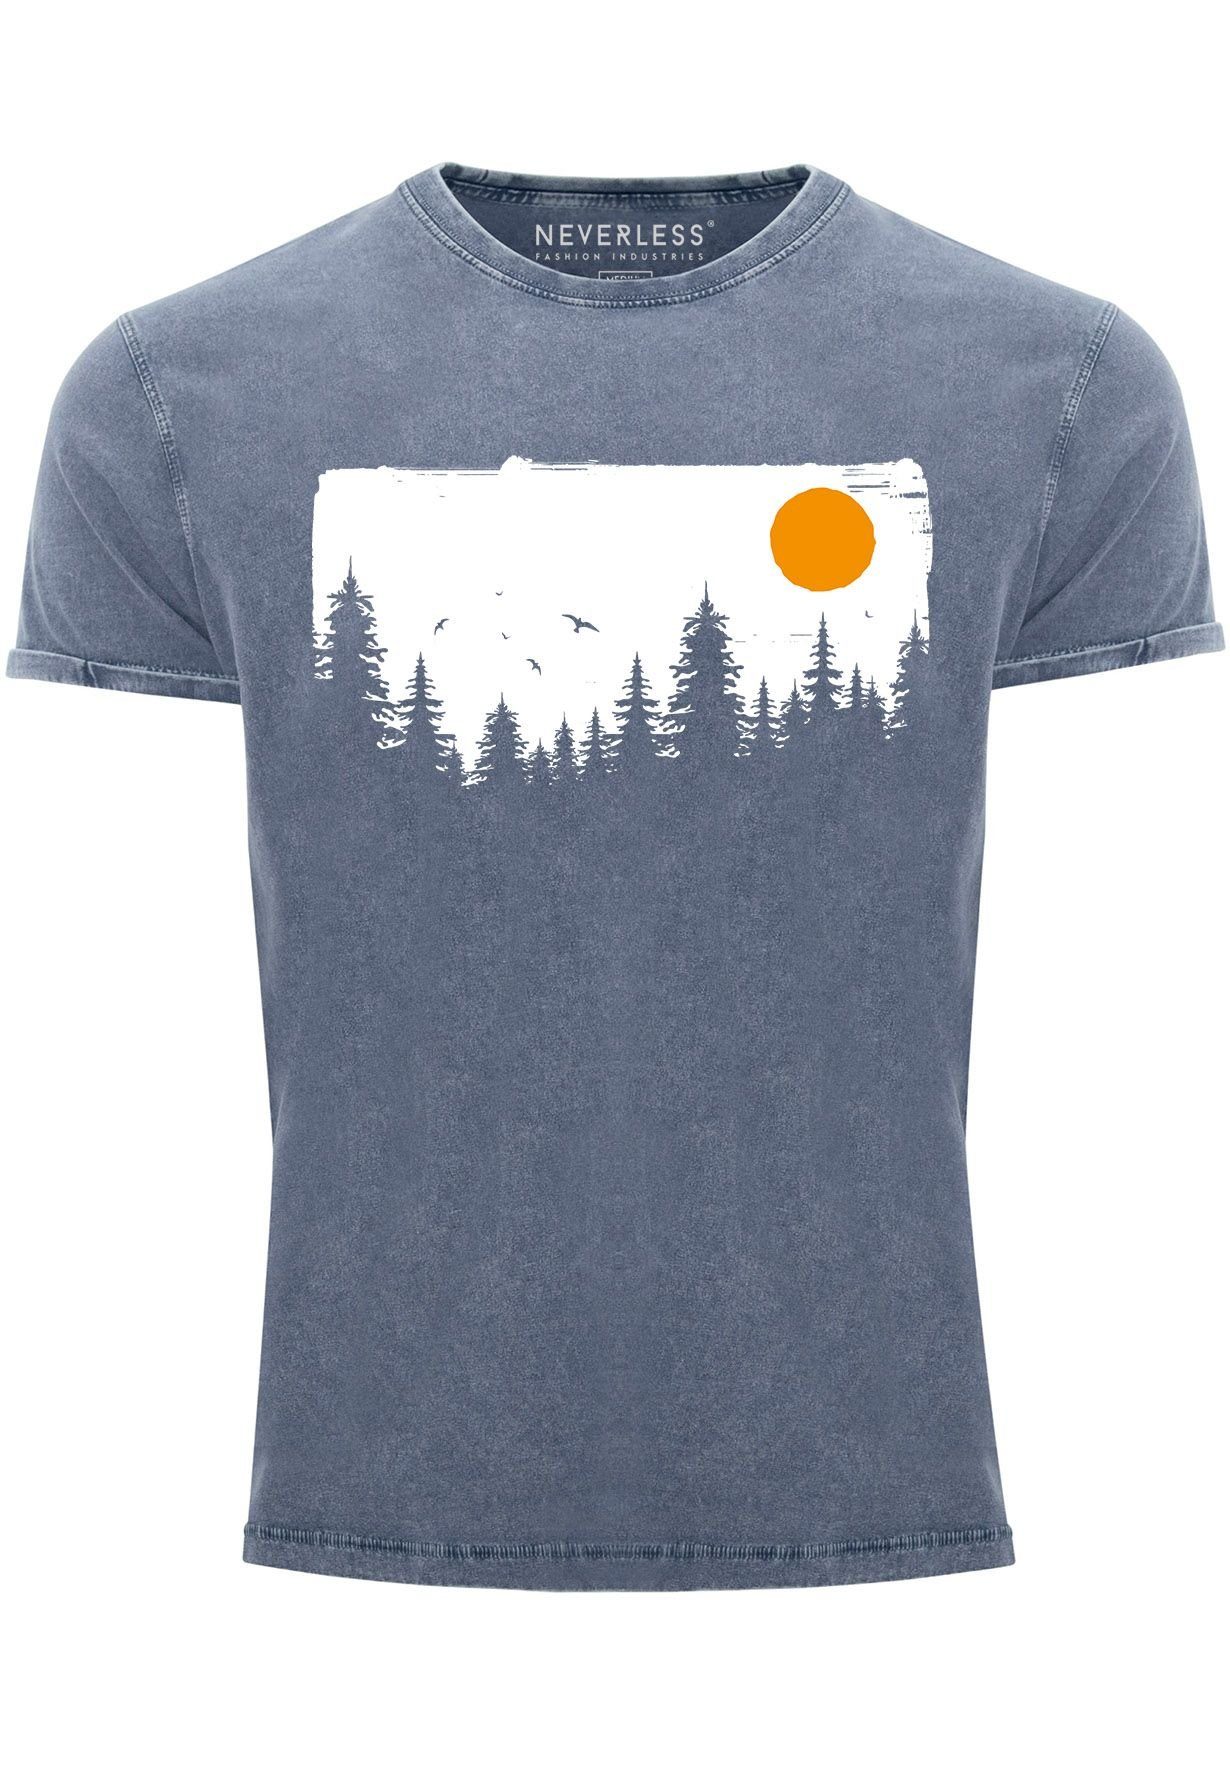 Neverless Print-Shirt Herren Vintage Shirt Wald Bäume Outdoor Adventure Abenteuer Natur-Lieb mit Print blau